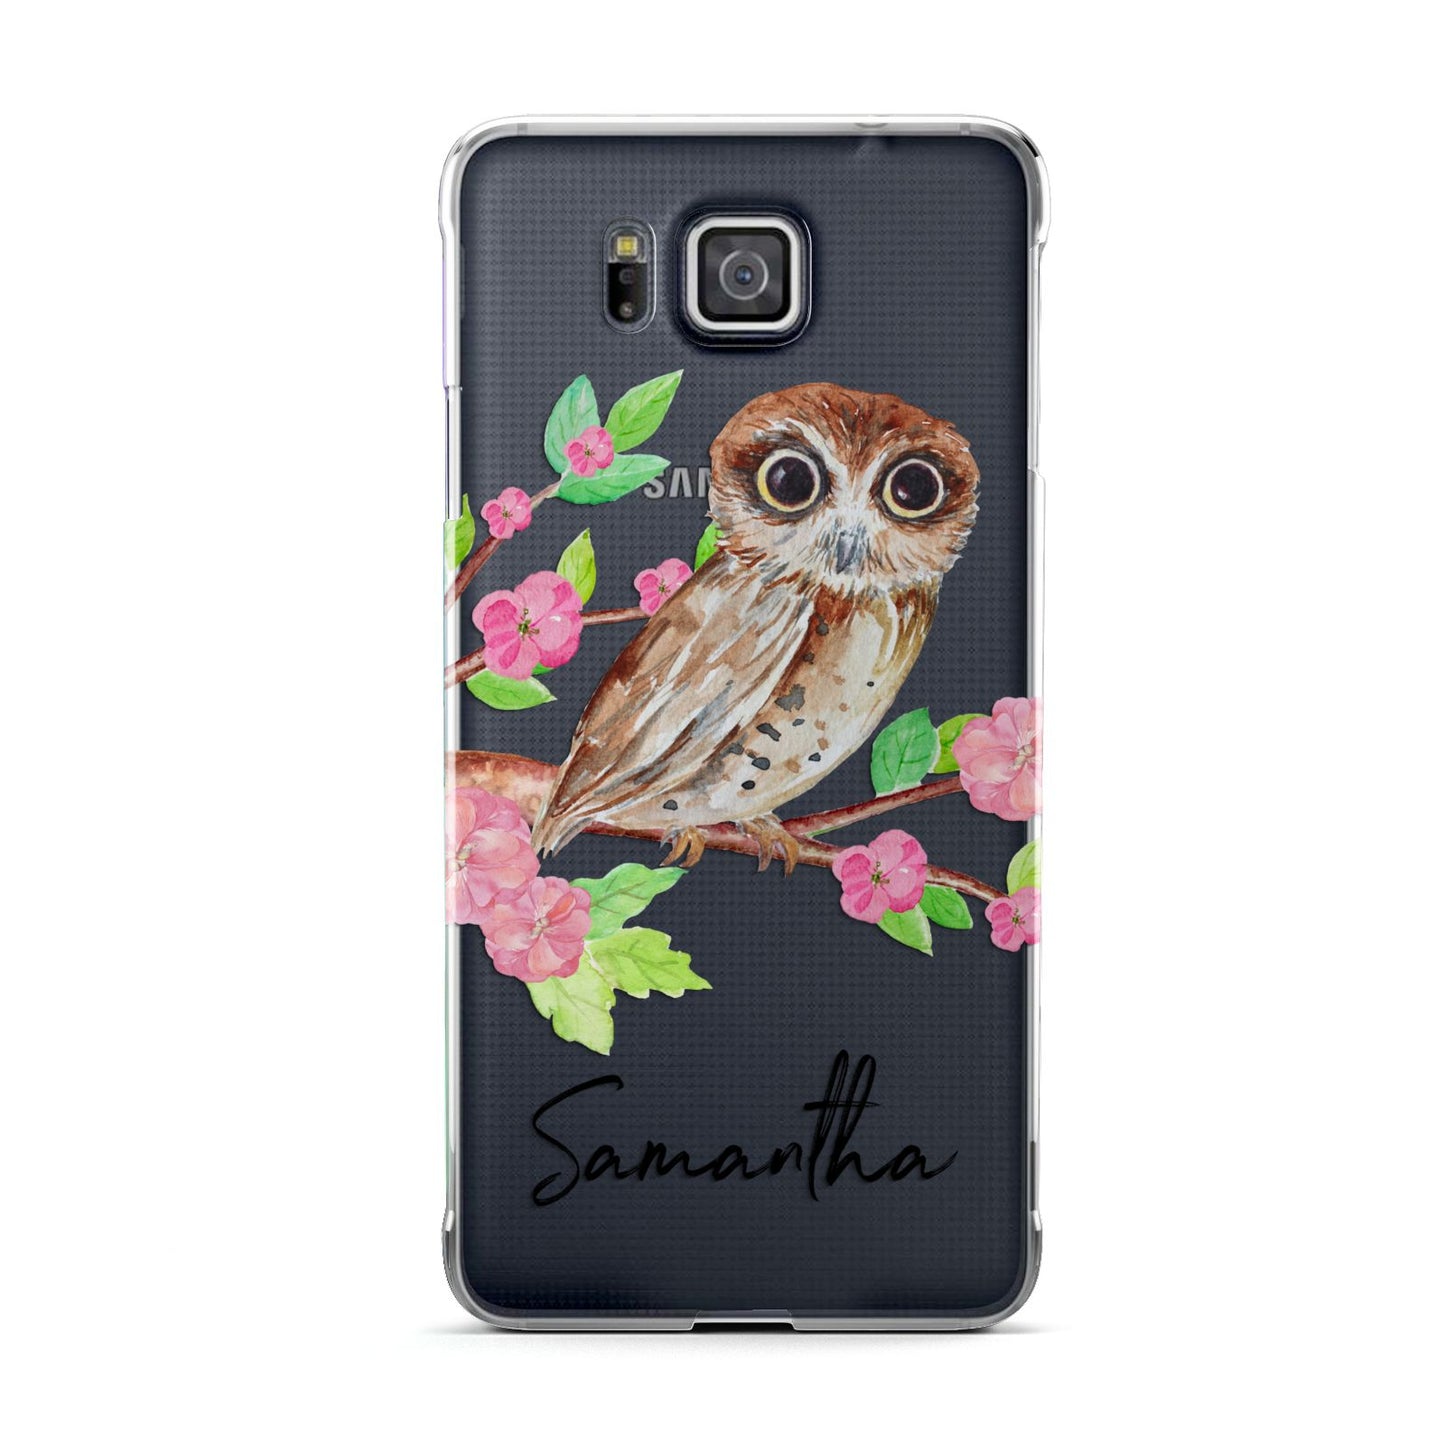 Personalised Owl Samsung Galaxy Alpha Case